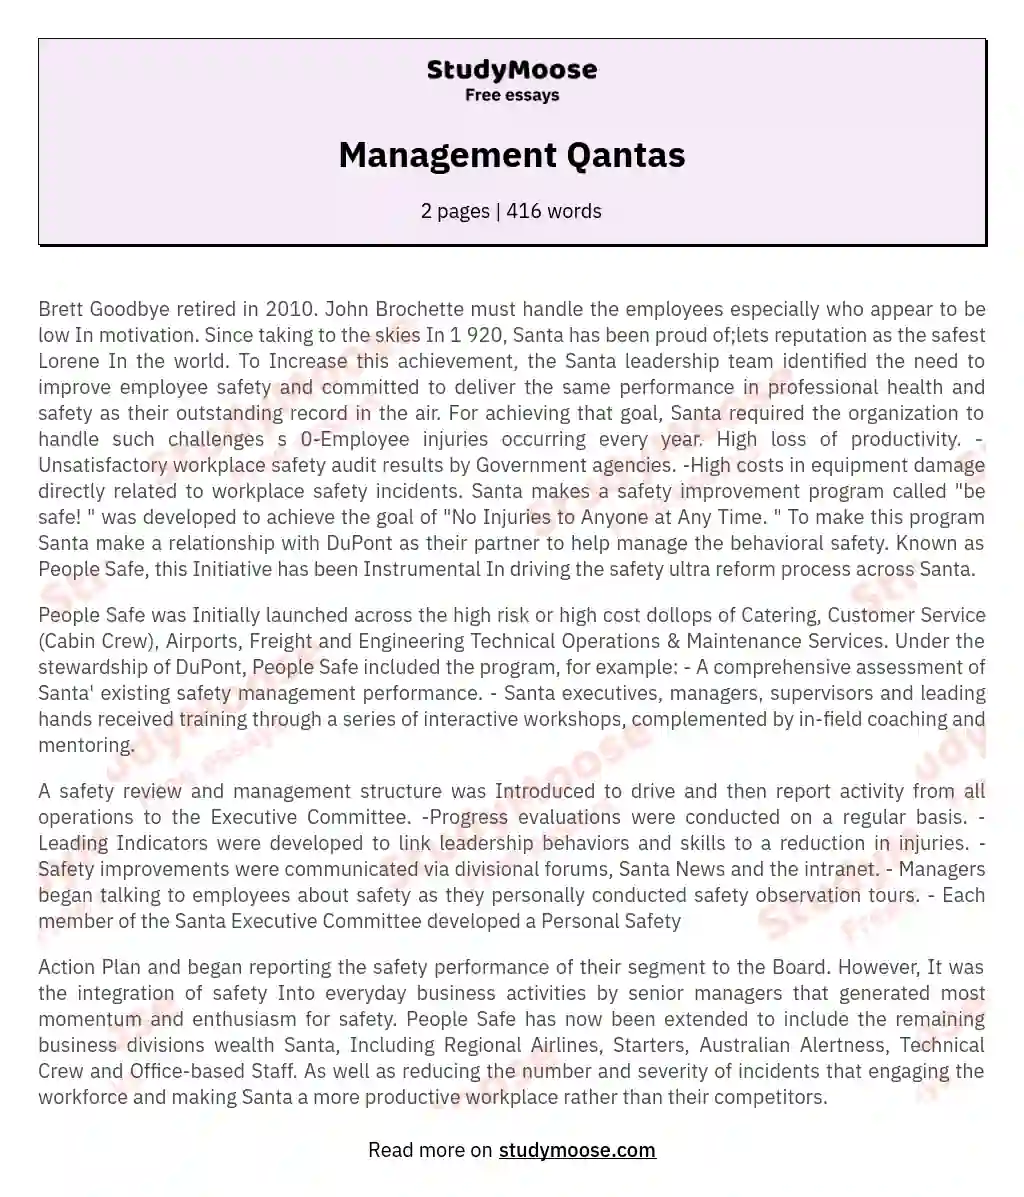 Management Qantas essay